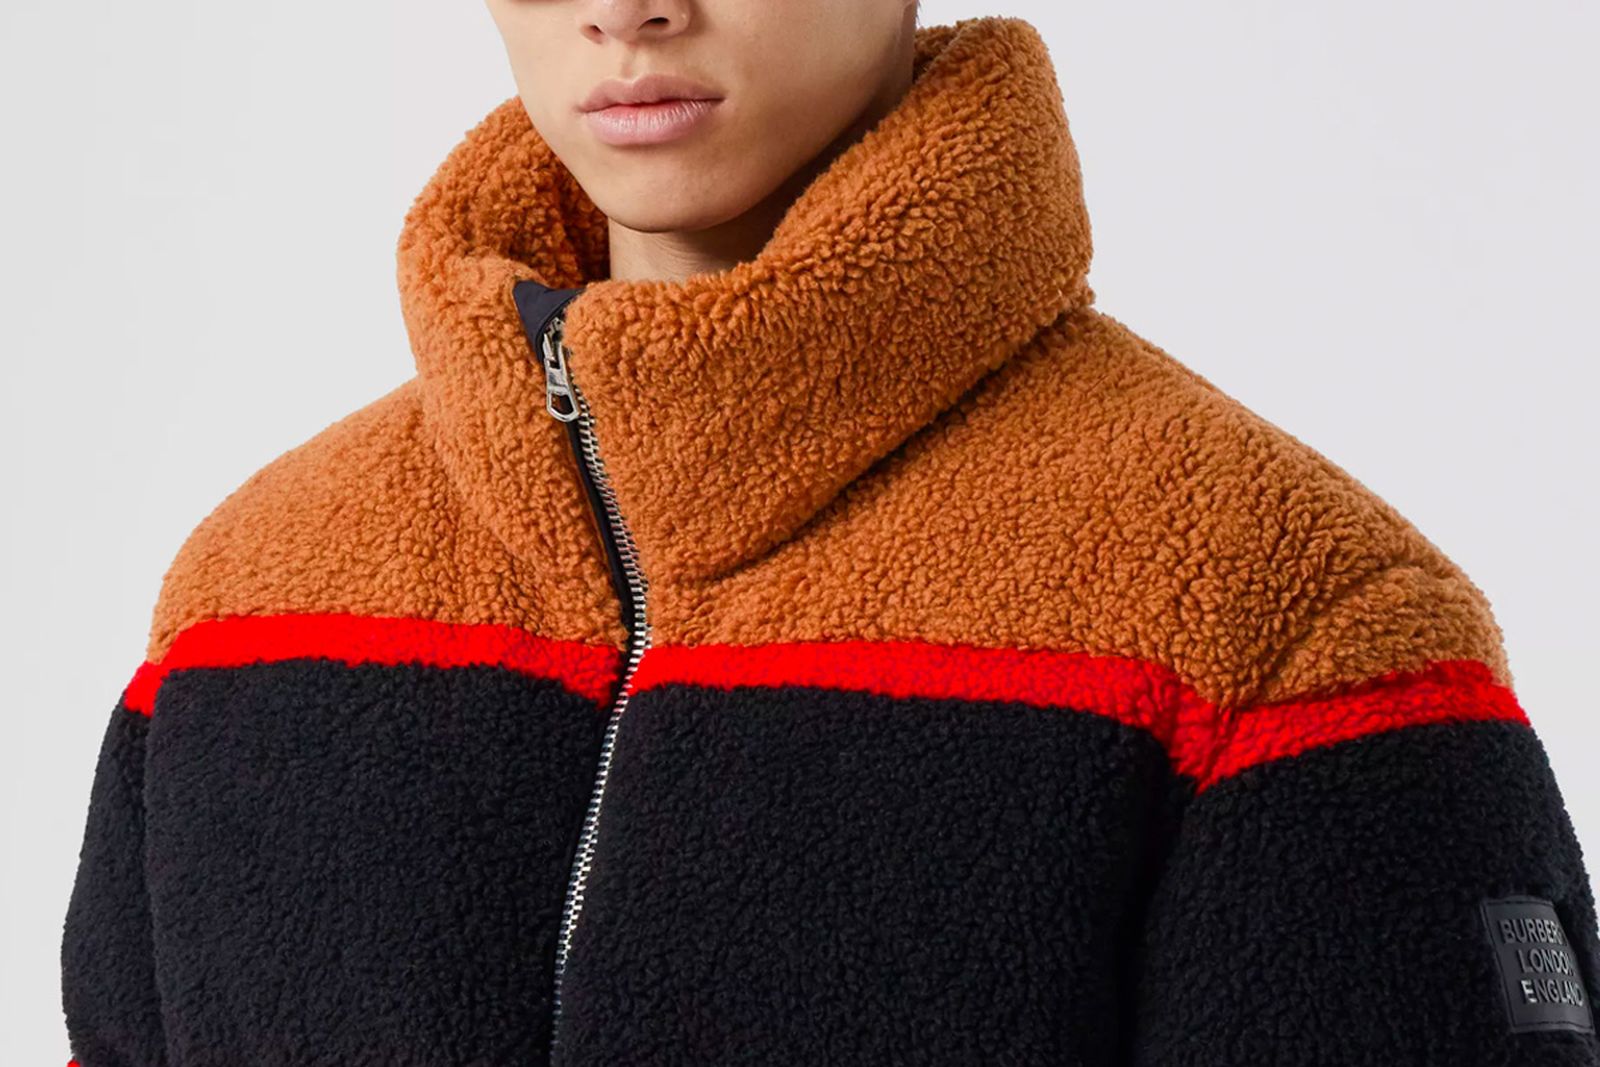 Burberry Coats: 10 of the Best Wear in Winter 2021